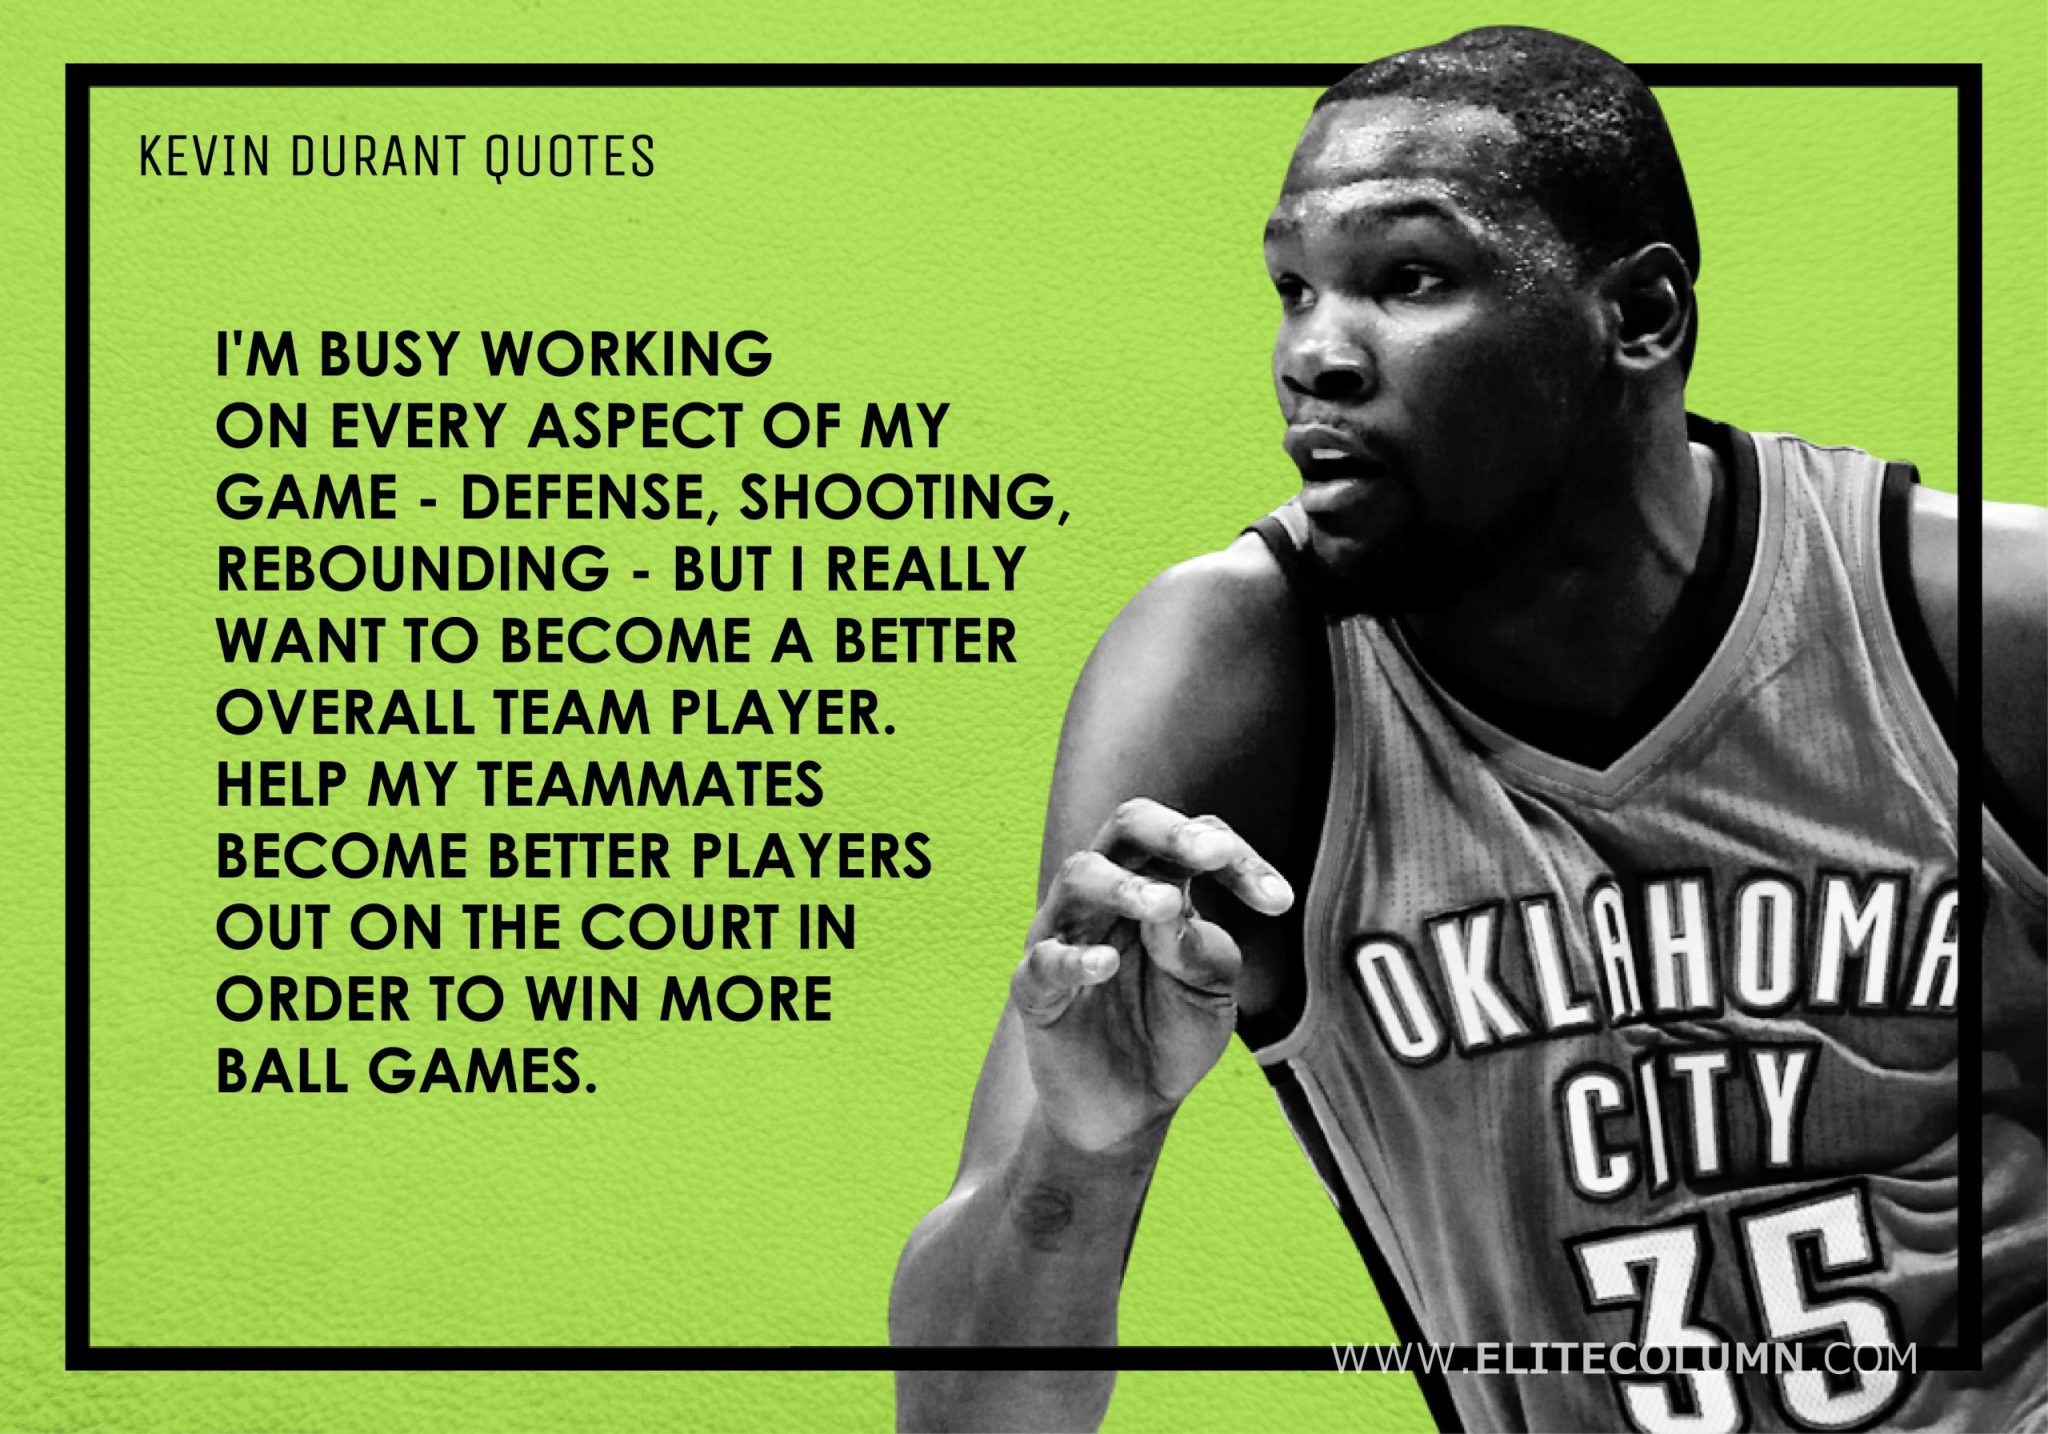 Kevin Durant Quotes 6 | EliteColumn